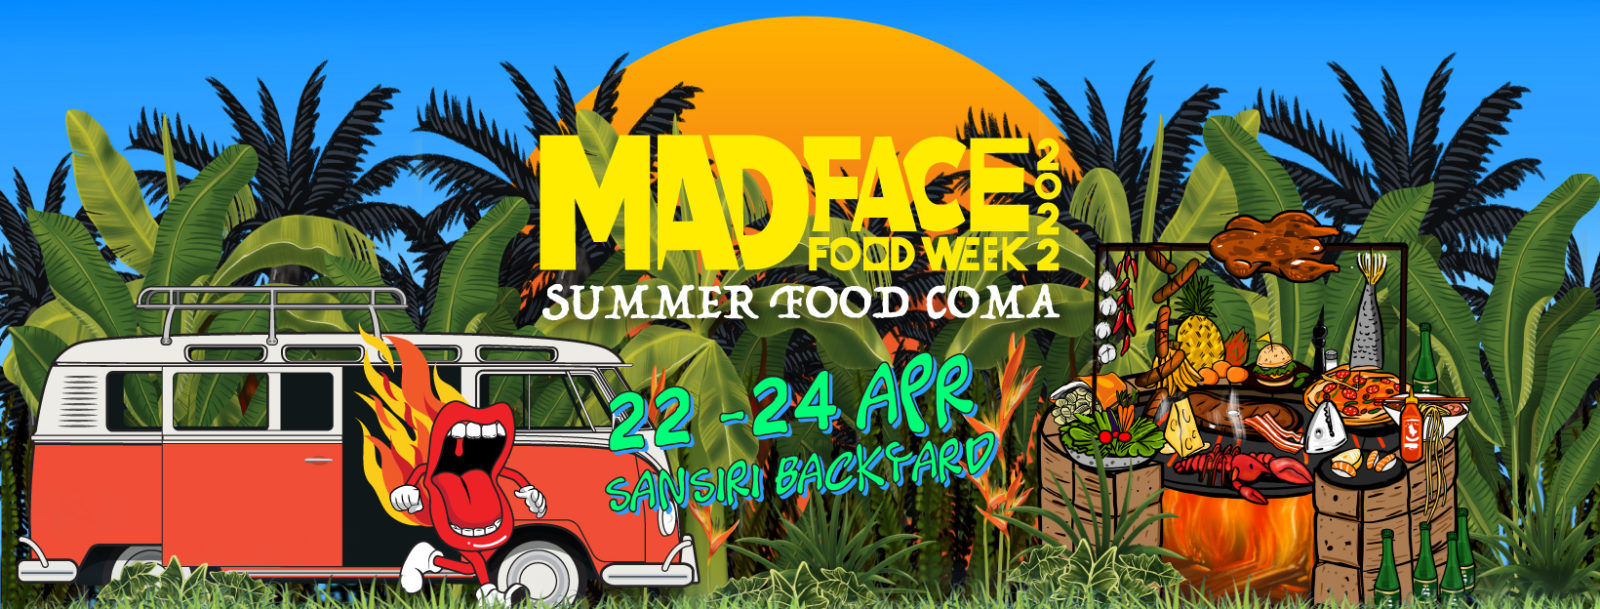 5 reasons to visit Mad Face Food Week 2022 in Bangkok this weekend